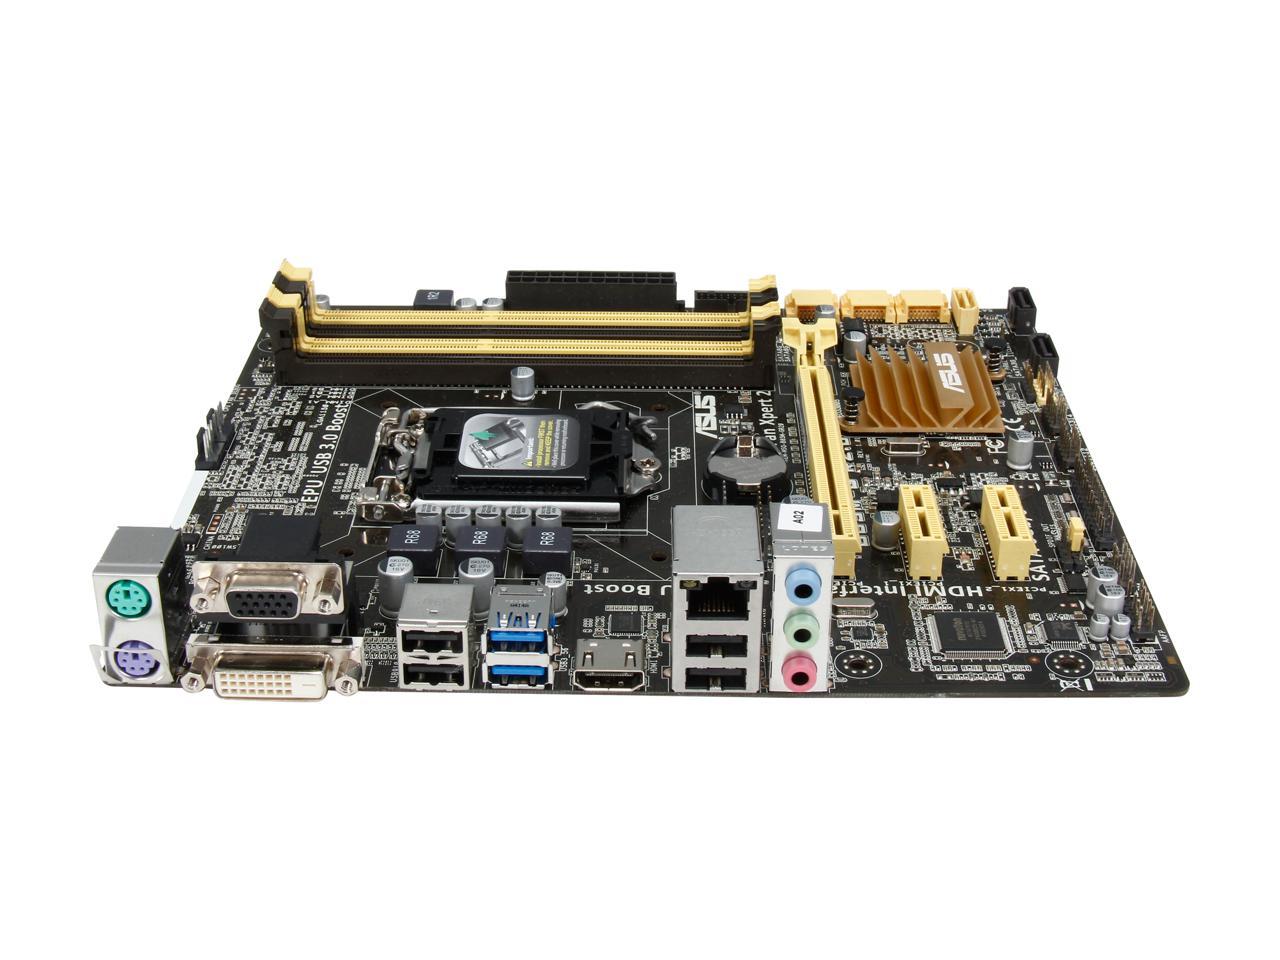 ASUS B85M-G R2.0 LGA 1150 Intel B85 HDMI SATA 6Gb/s USB 3.0 Micro ATX Intel Motherboard